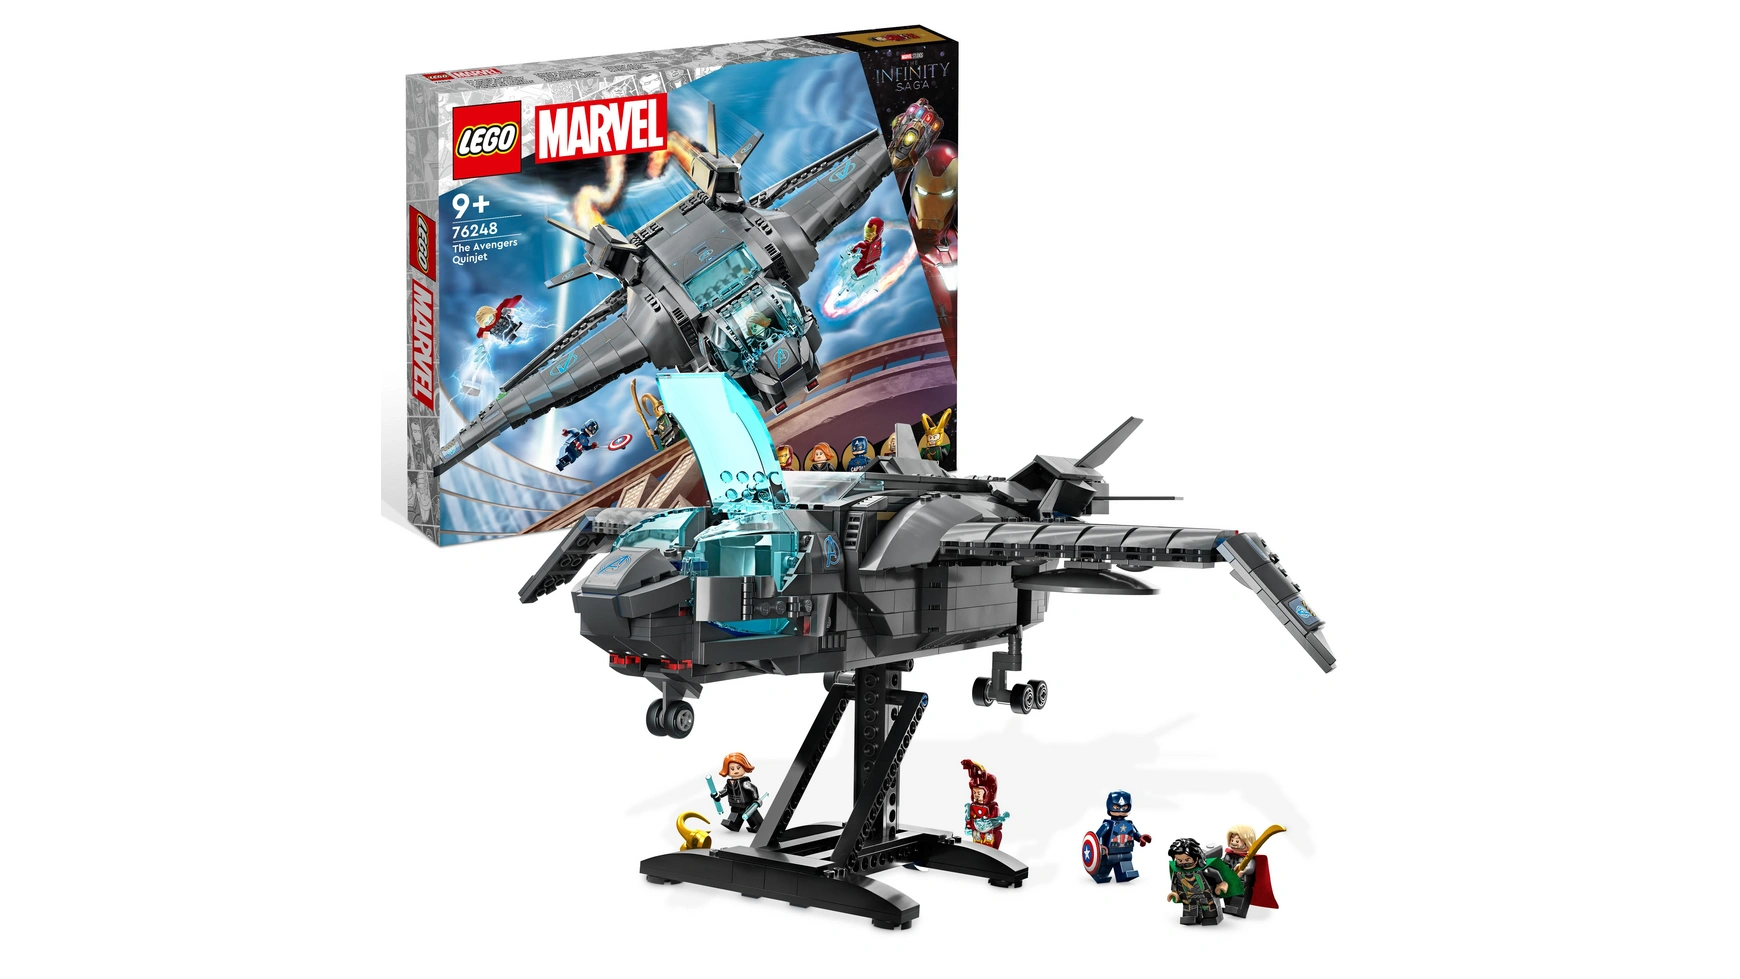 Lego Marvel Набор космического корабля Мстители Квинджет lego 76248 marvel the avengers quinjet